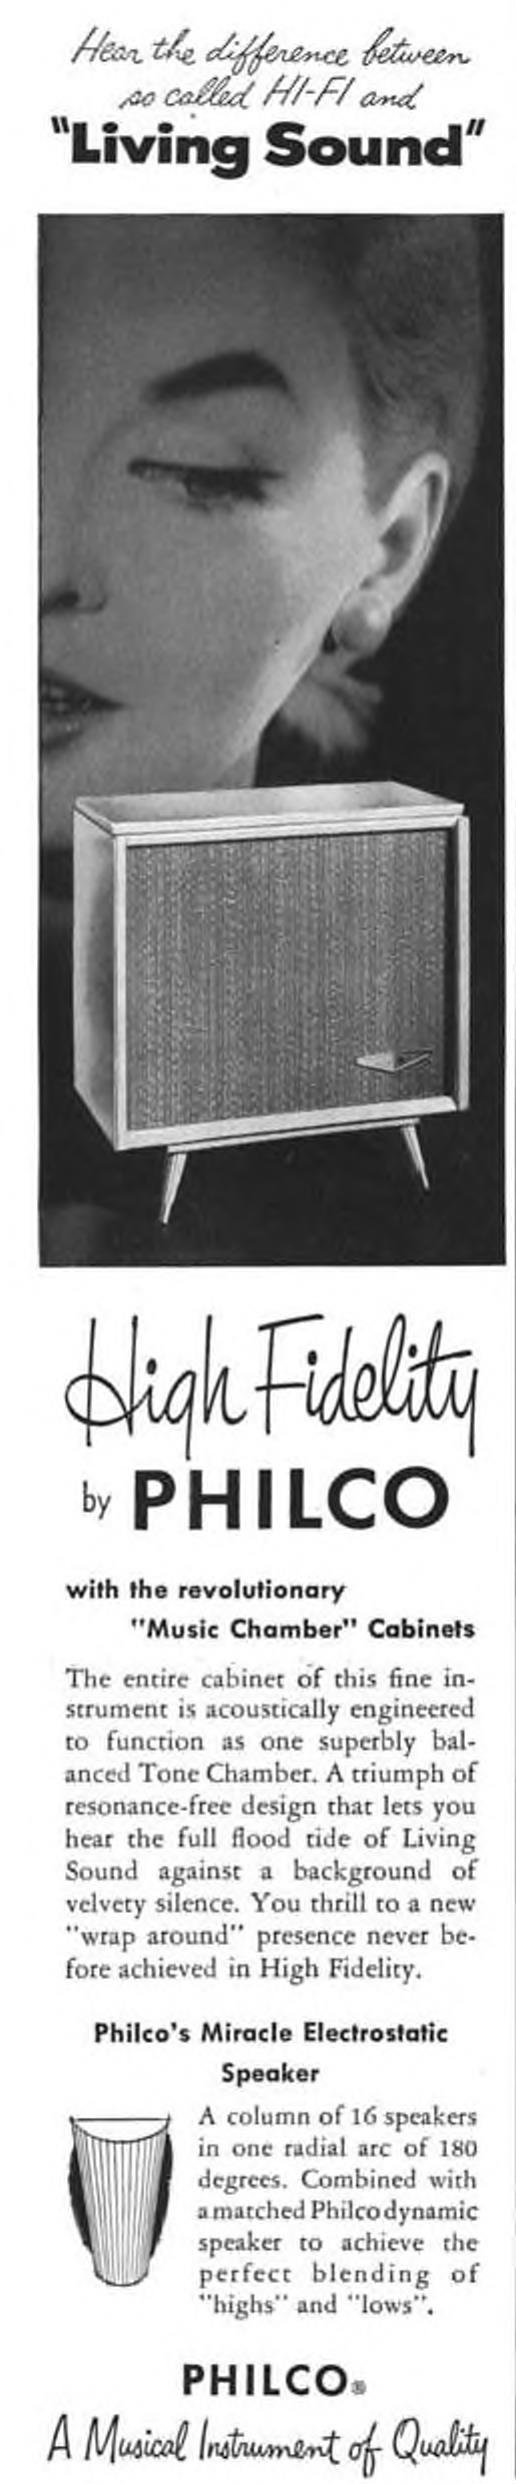 Philco 1956 1.jpg